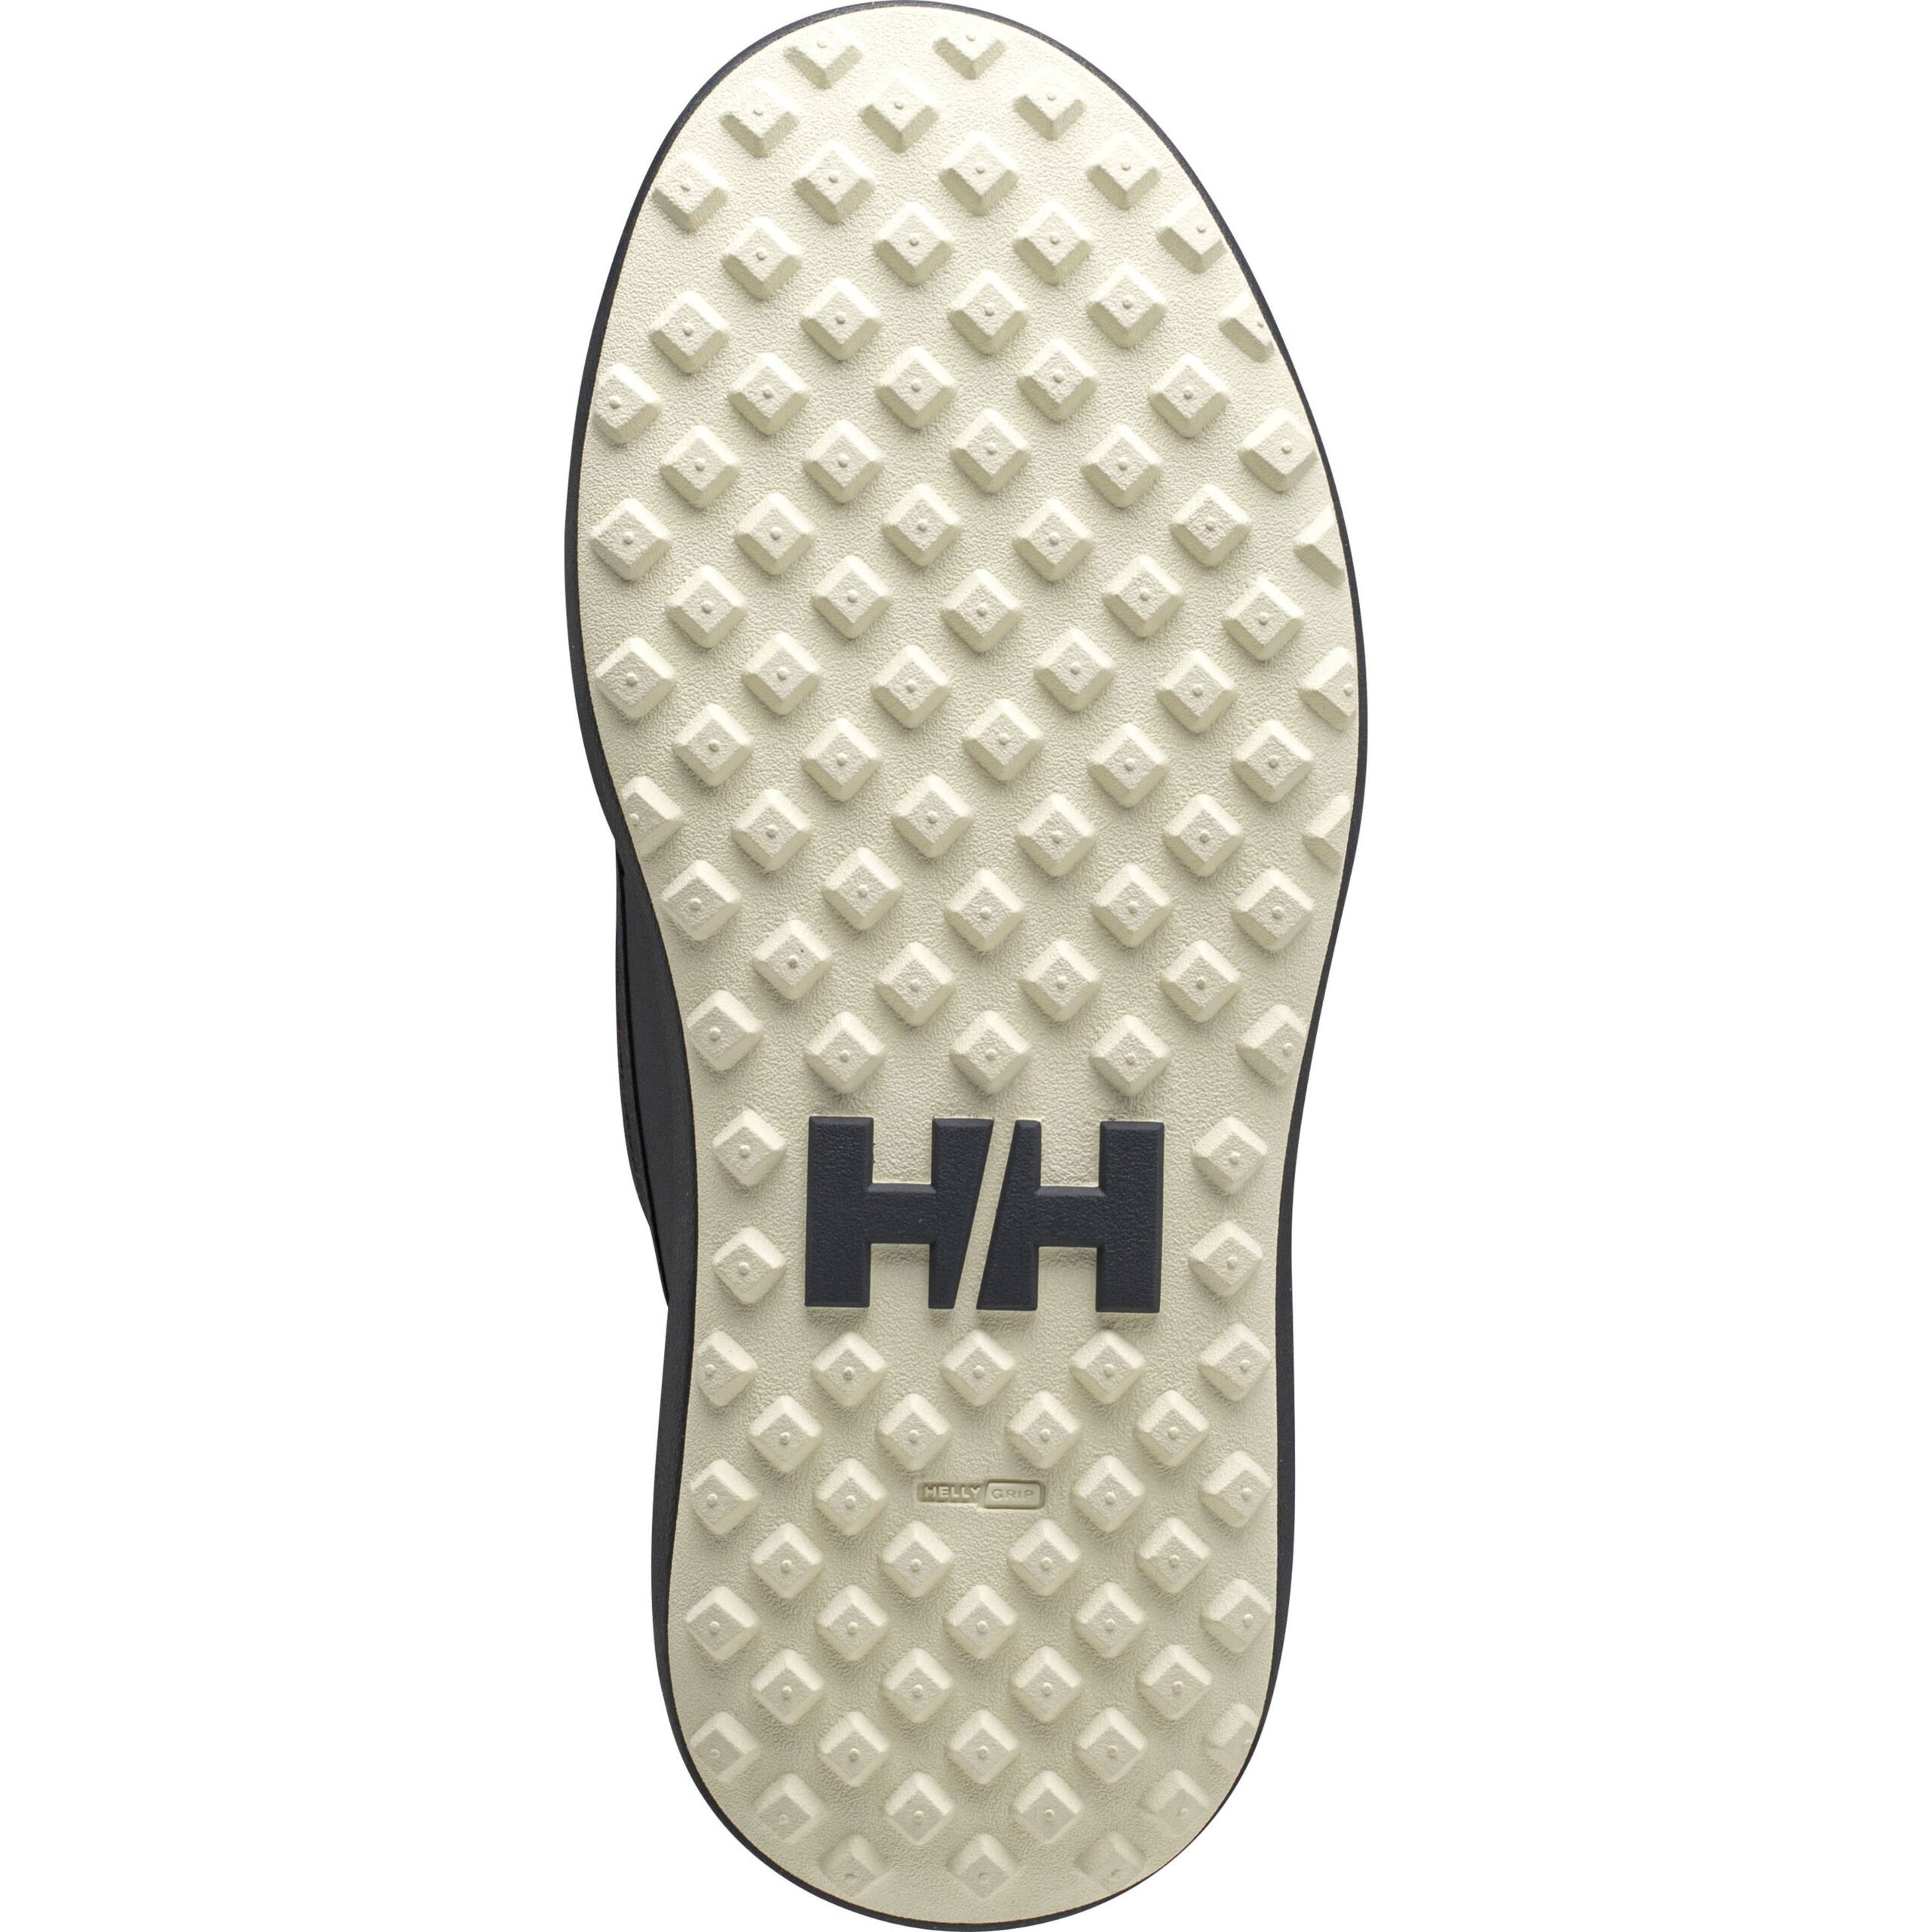 Helly Hansen Women's Isolabella Demi Waterproof Insulated Non-Slip Winter  Boots